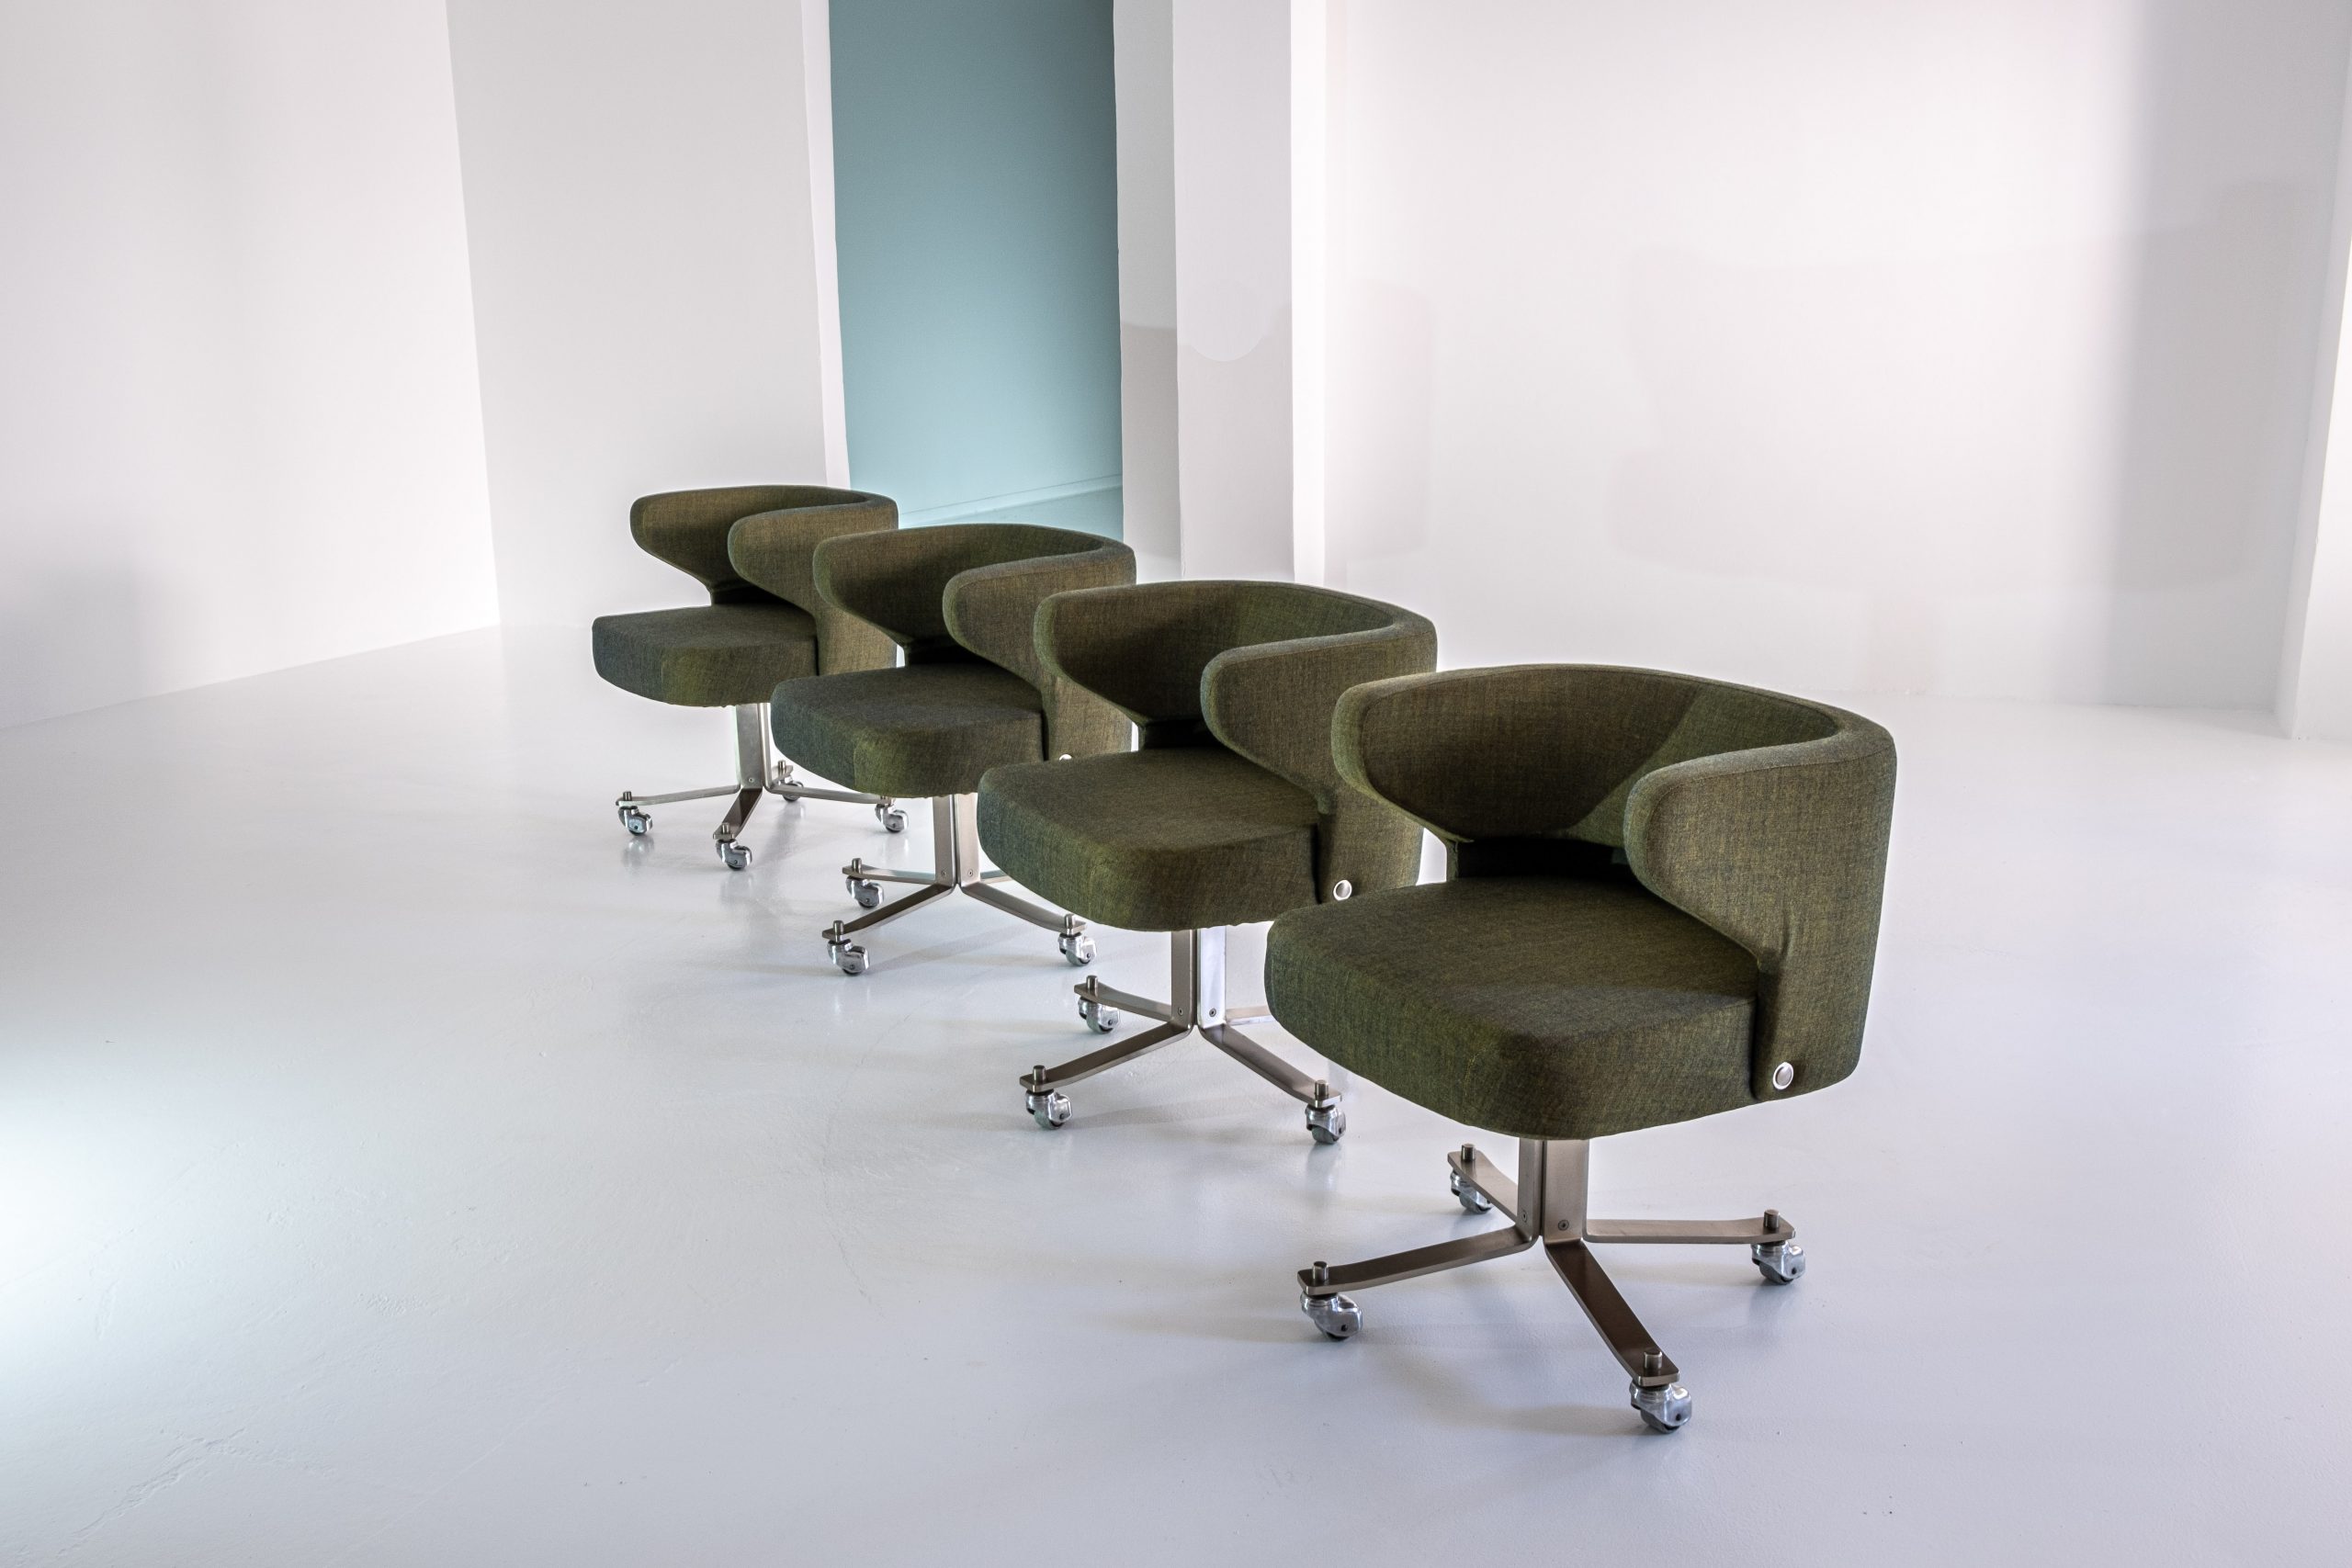 Gianni moscatelli, Money chair, formanova,, table bench, antibeige, vintage, midcentury modern, collectible, interior